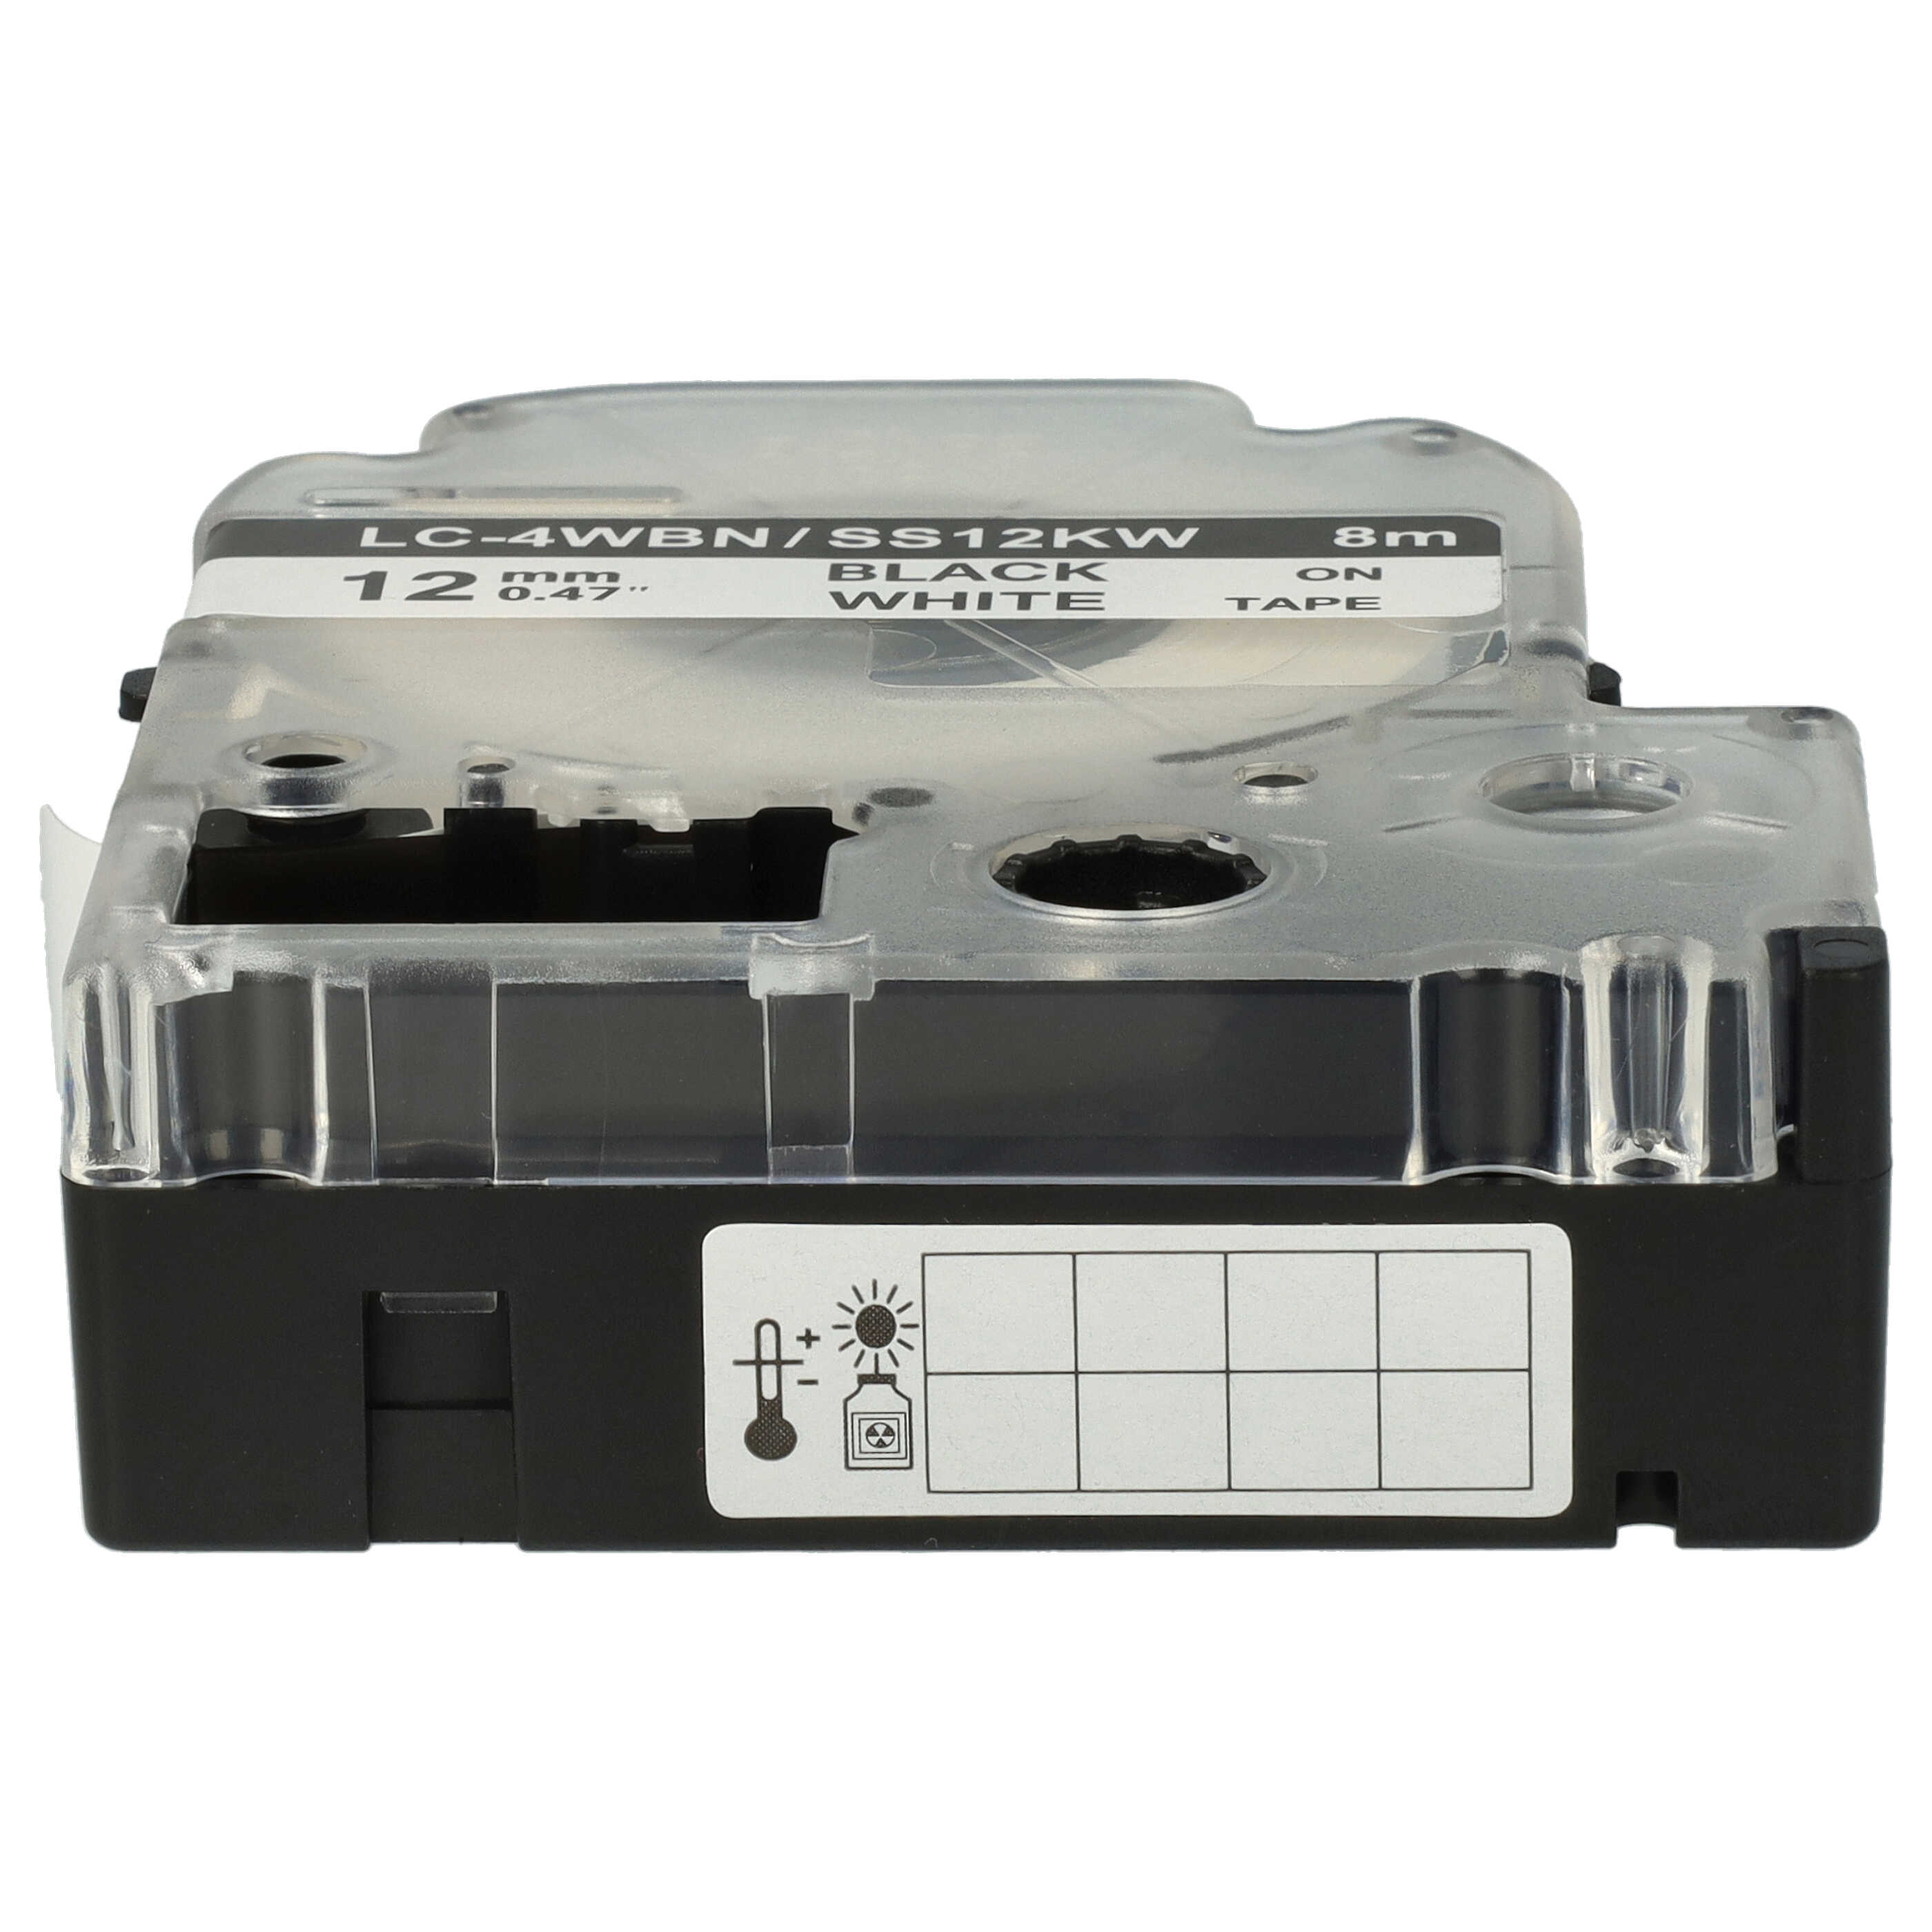 2x Casete cinta escritura reemplaza Epson SS12KW, LC-4WBN Negro su Blanco